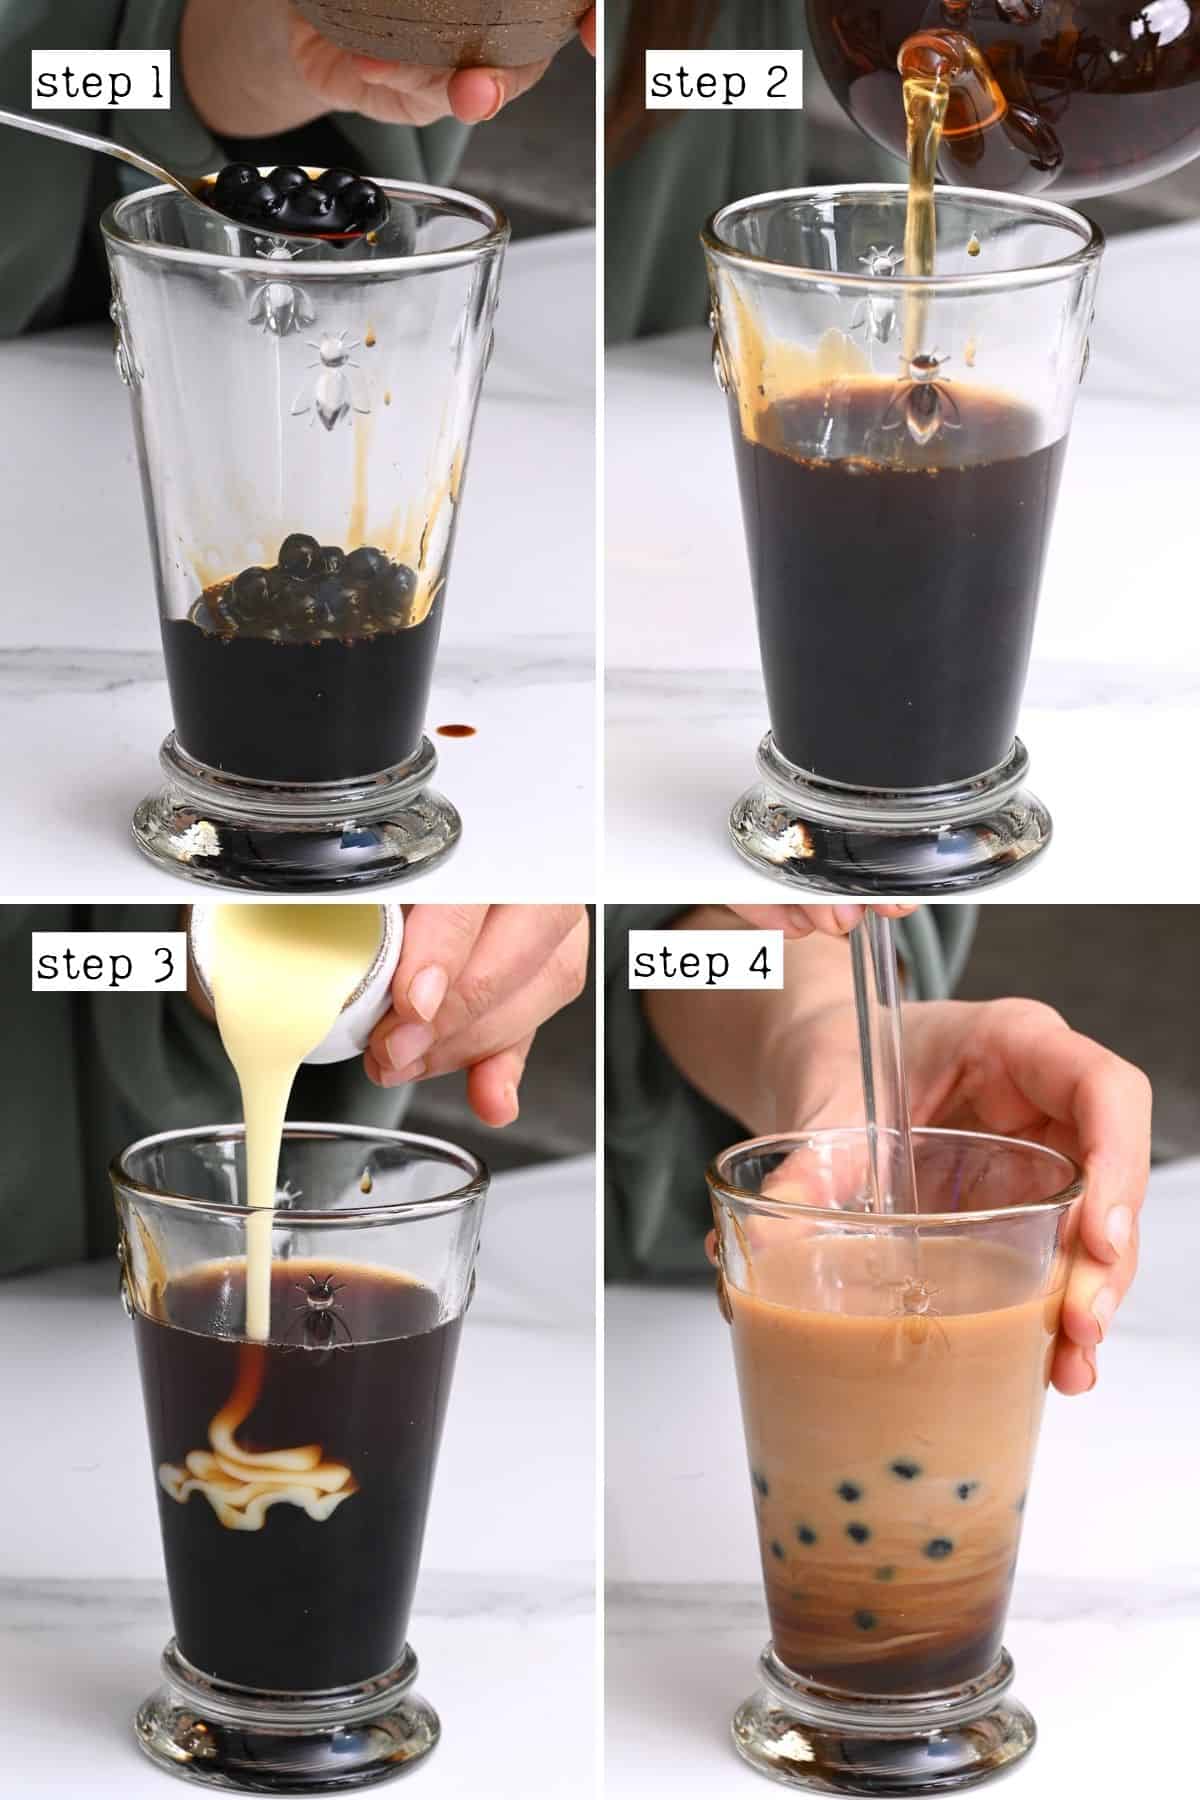 Steps for making milk bubble tea